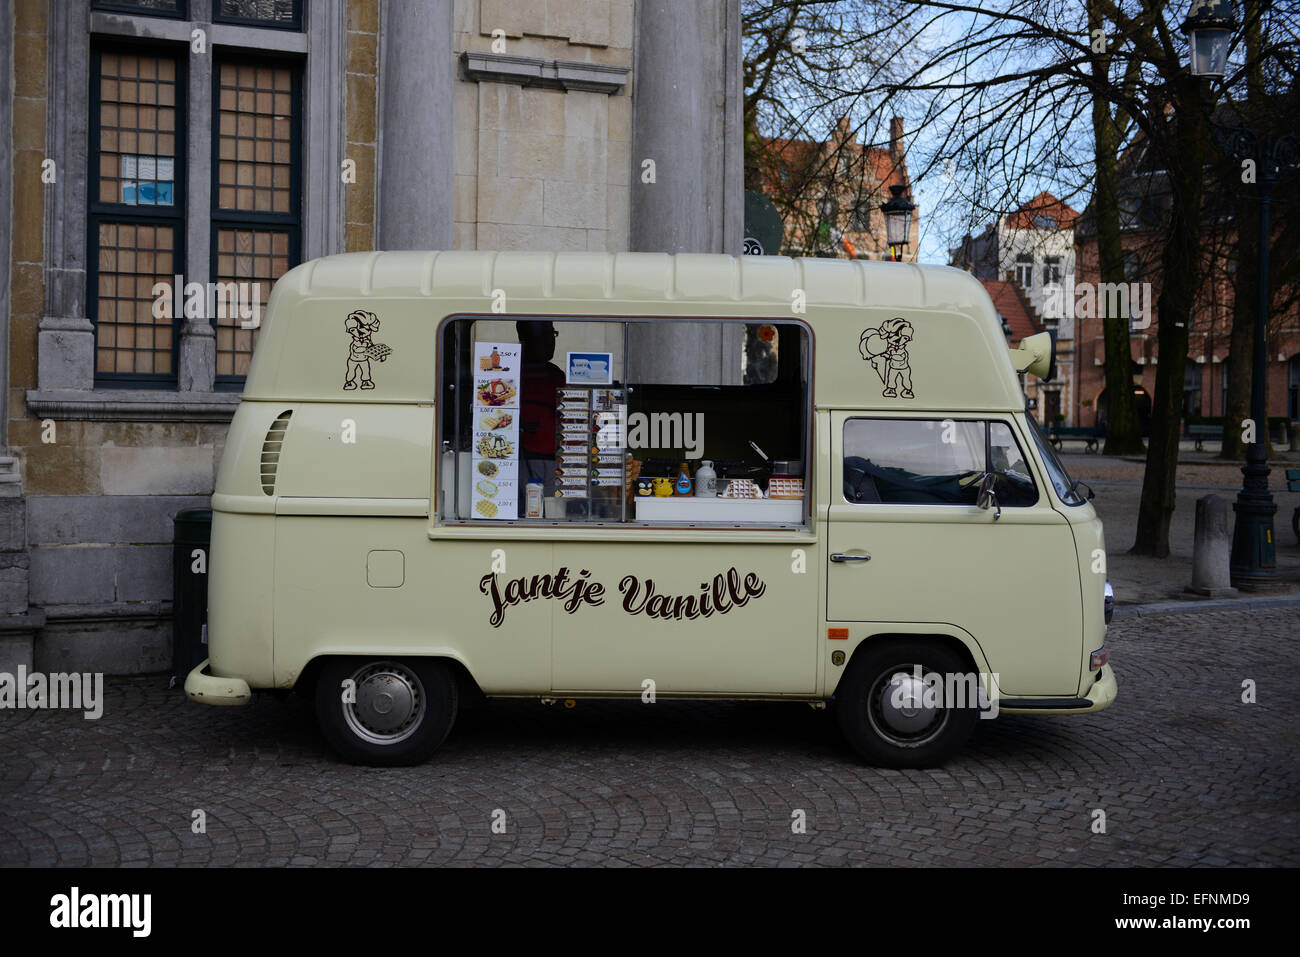 Jantje Vanille Street Food Truck, Brugge, Belgium Stock Photo